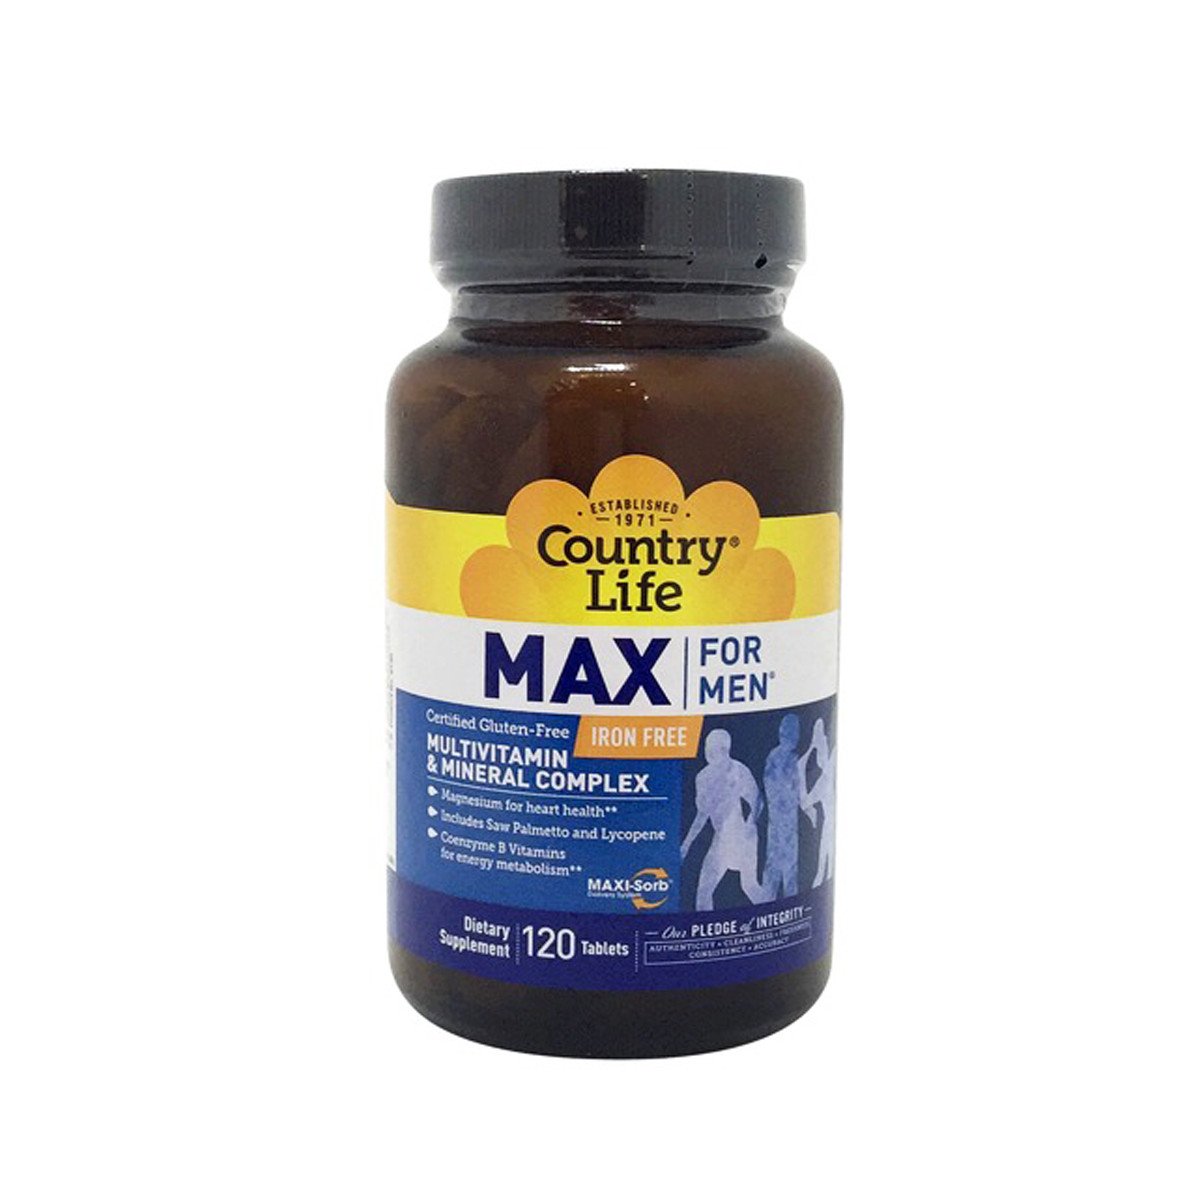 Country Life Мультивитамины и Минералы для Мужчин, Max for Men, Country Life, 120 таблеток, , 